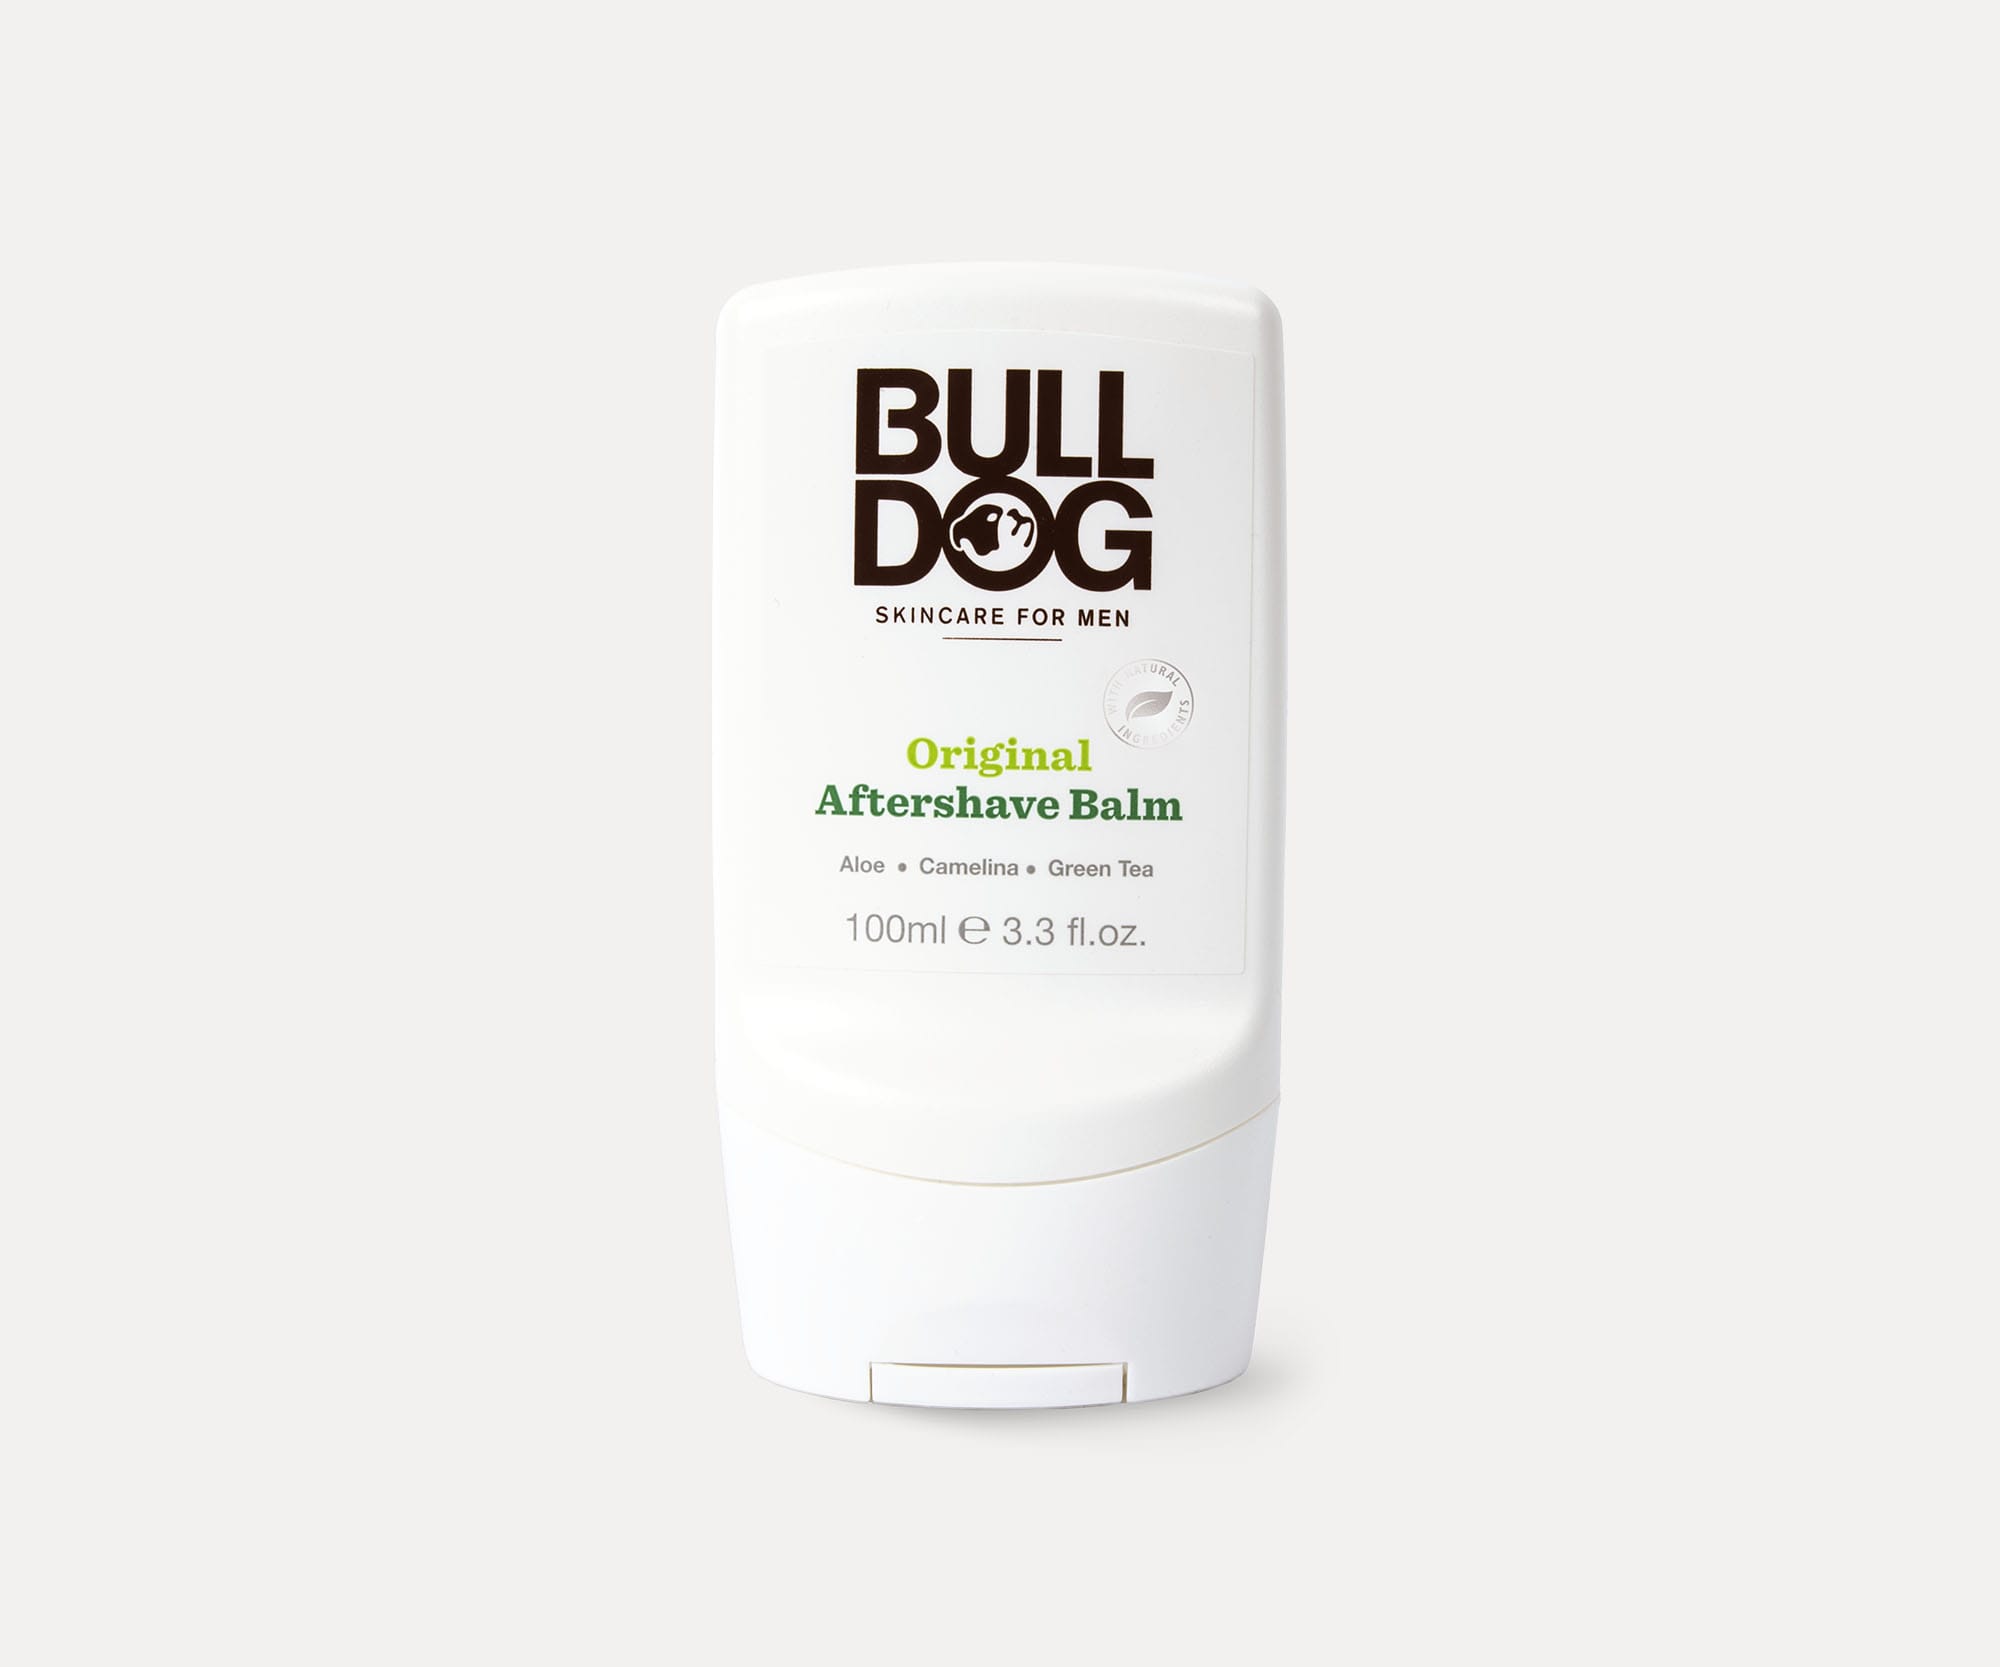 Original Aftershave Balm Bulldog